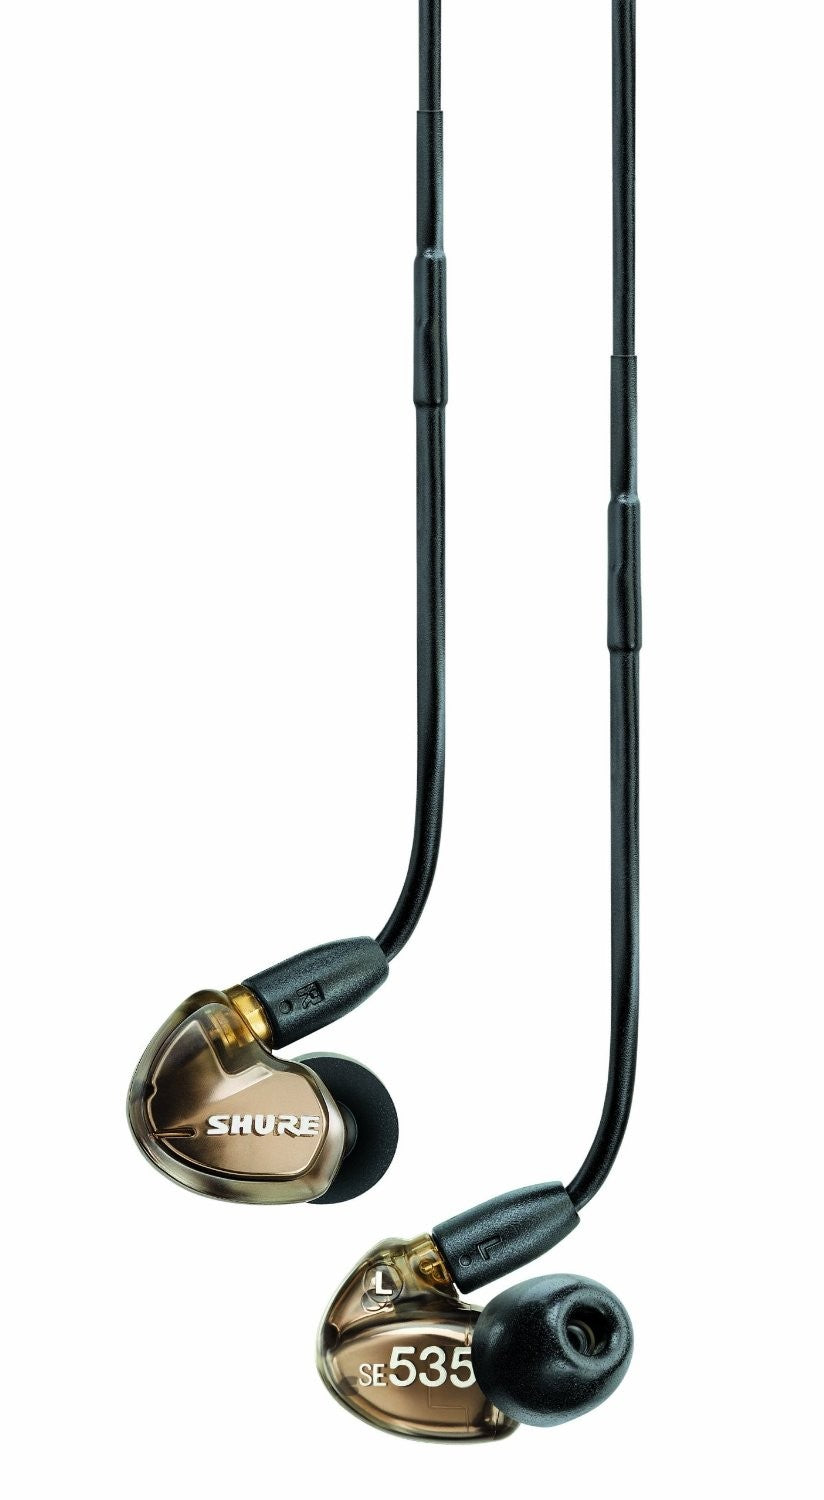 Shure SE535-V Sound Isolating Triple Driver Earphones with Detachable Cable (Metallic Bronze)